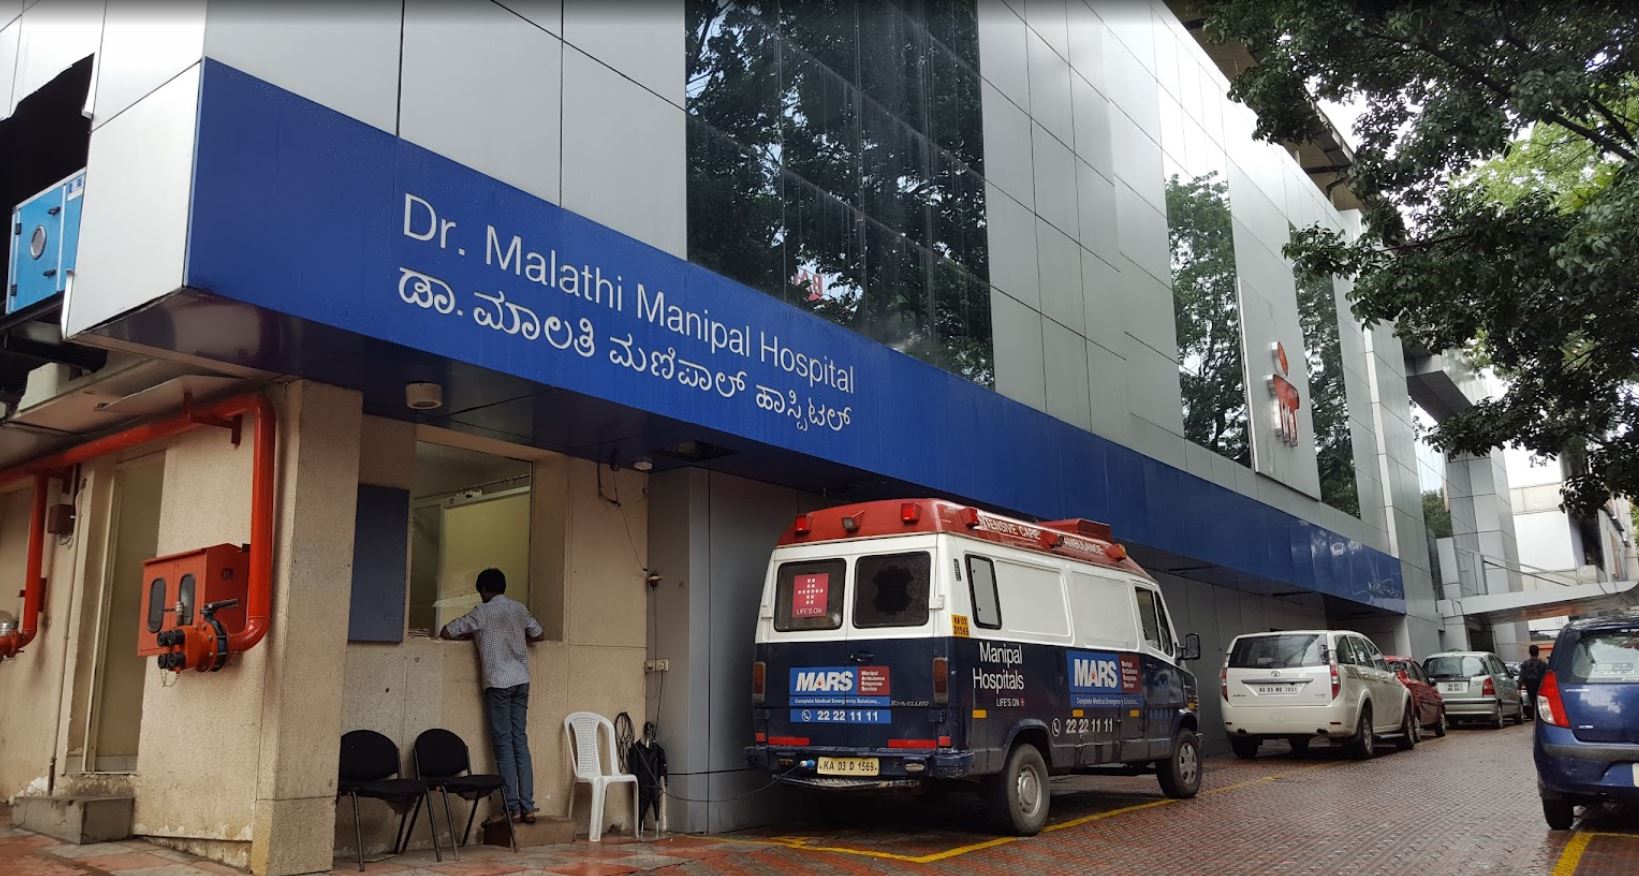 Dr. Malathi Manipal Hospital photo